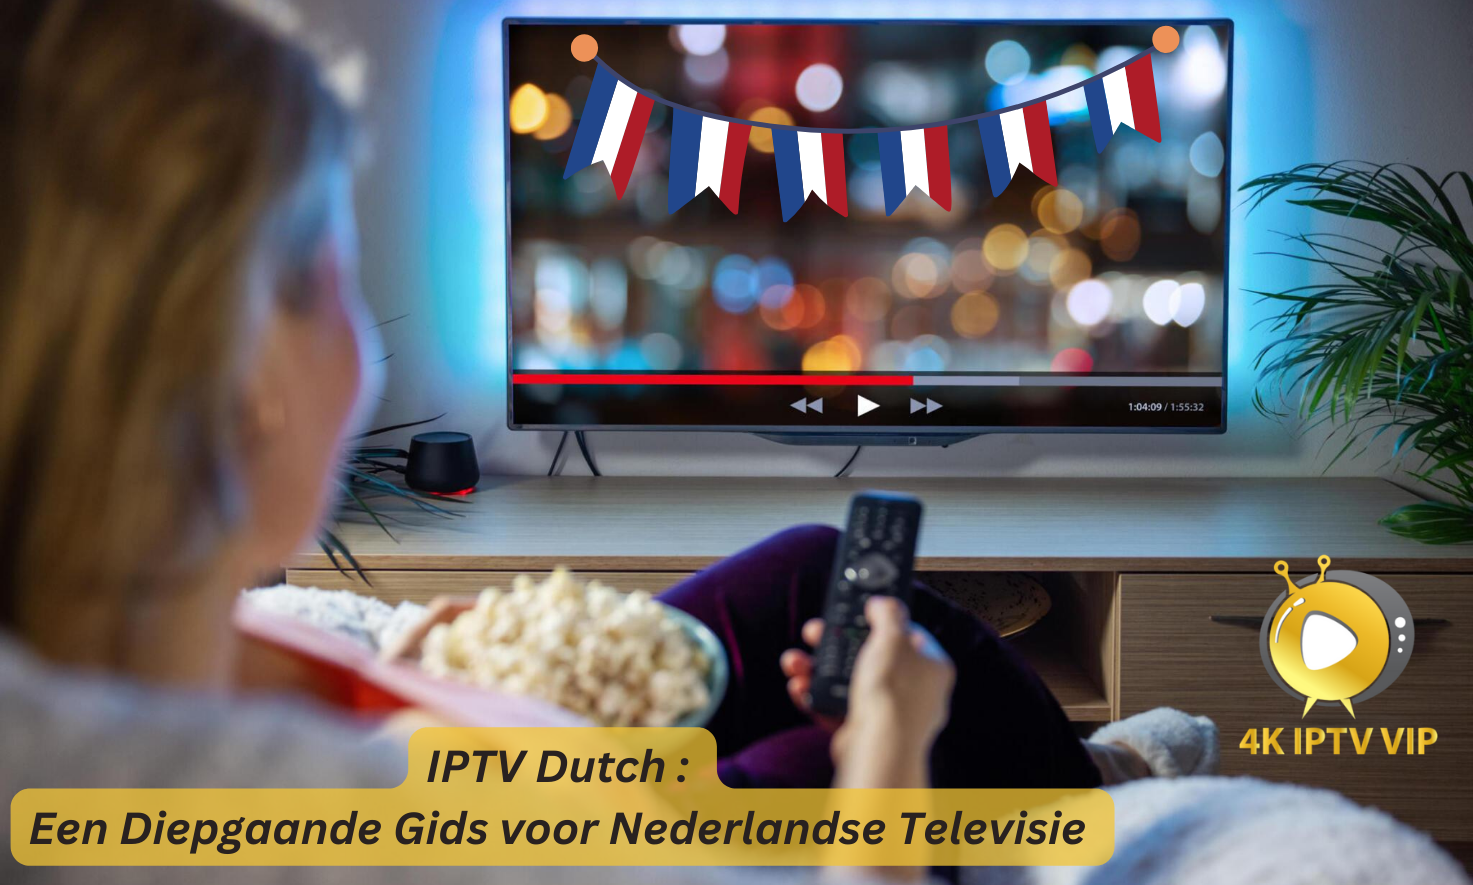 IPTV Dutch